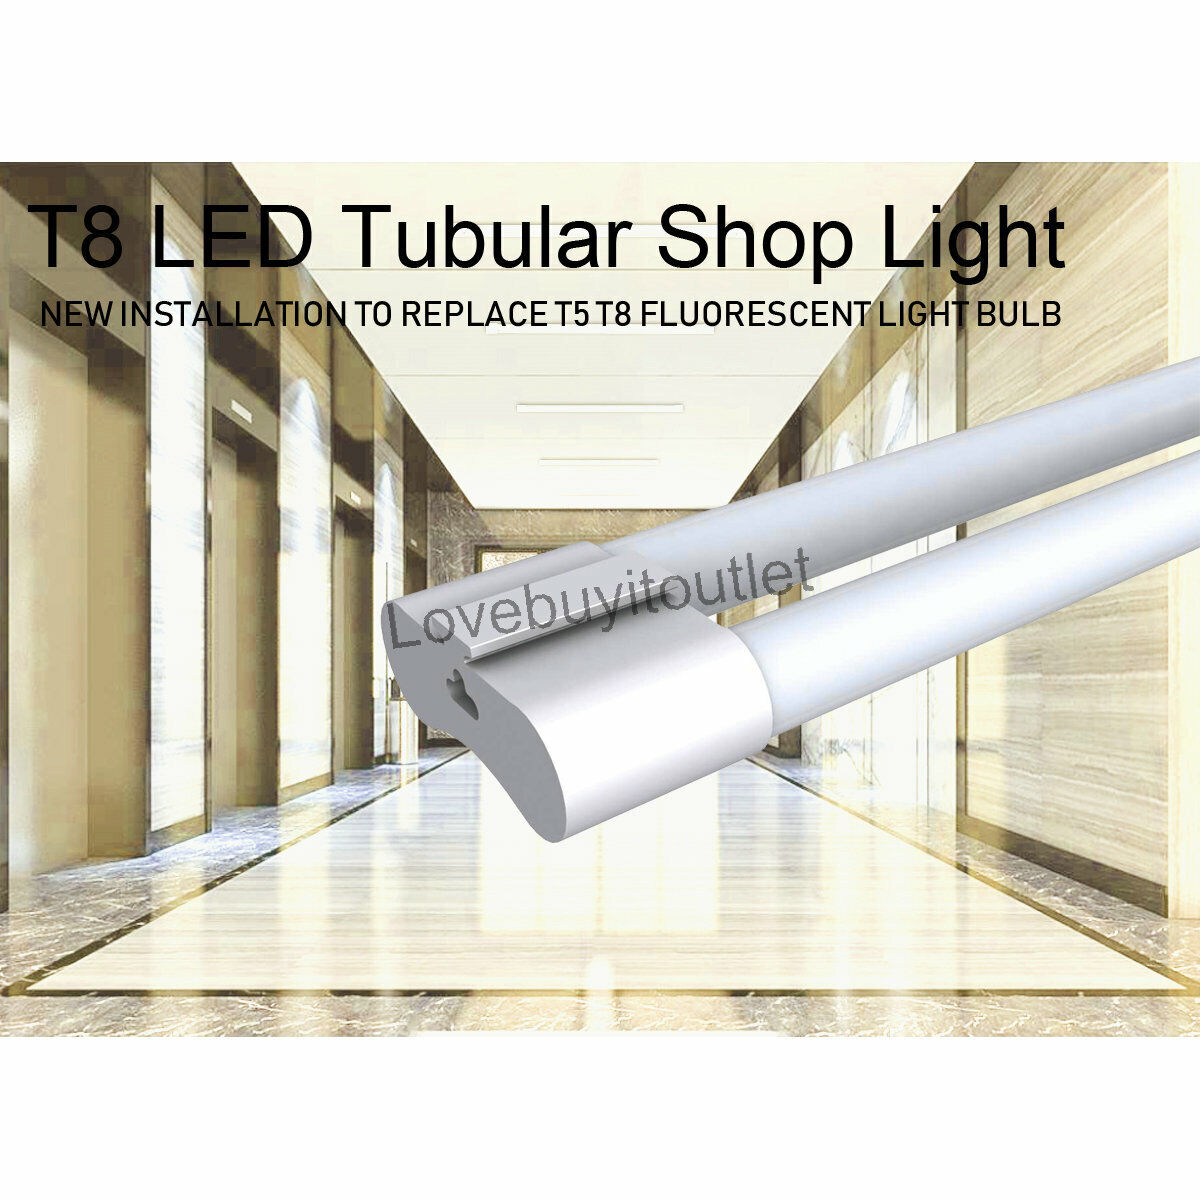 4 Pack 36W Double Tube Light Fixture LED Shop Light for Garage Daylight 6000K Lovebuyitoutlet Does Not Apply - фотография #2